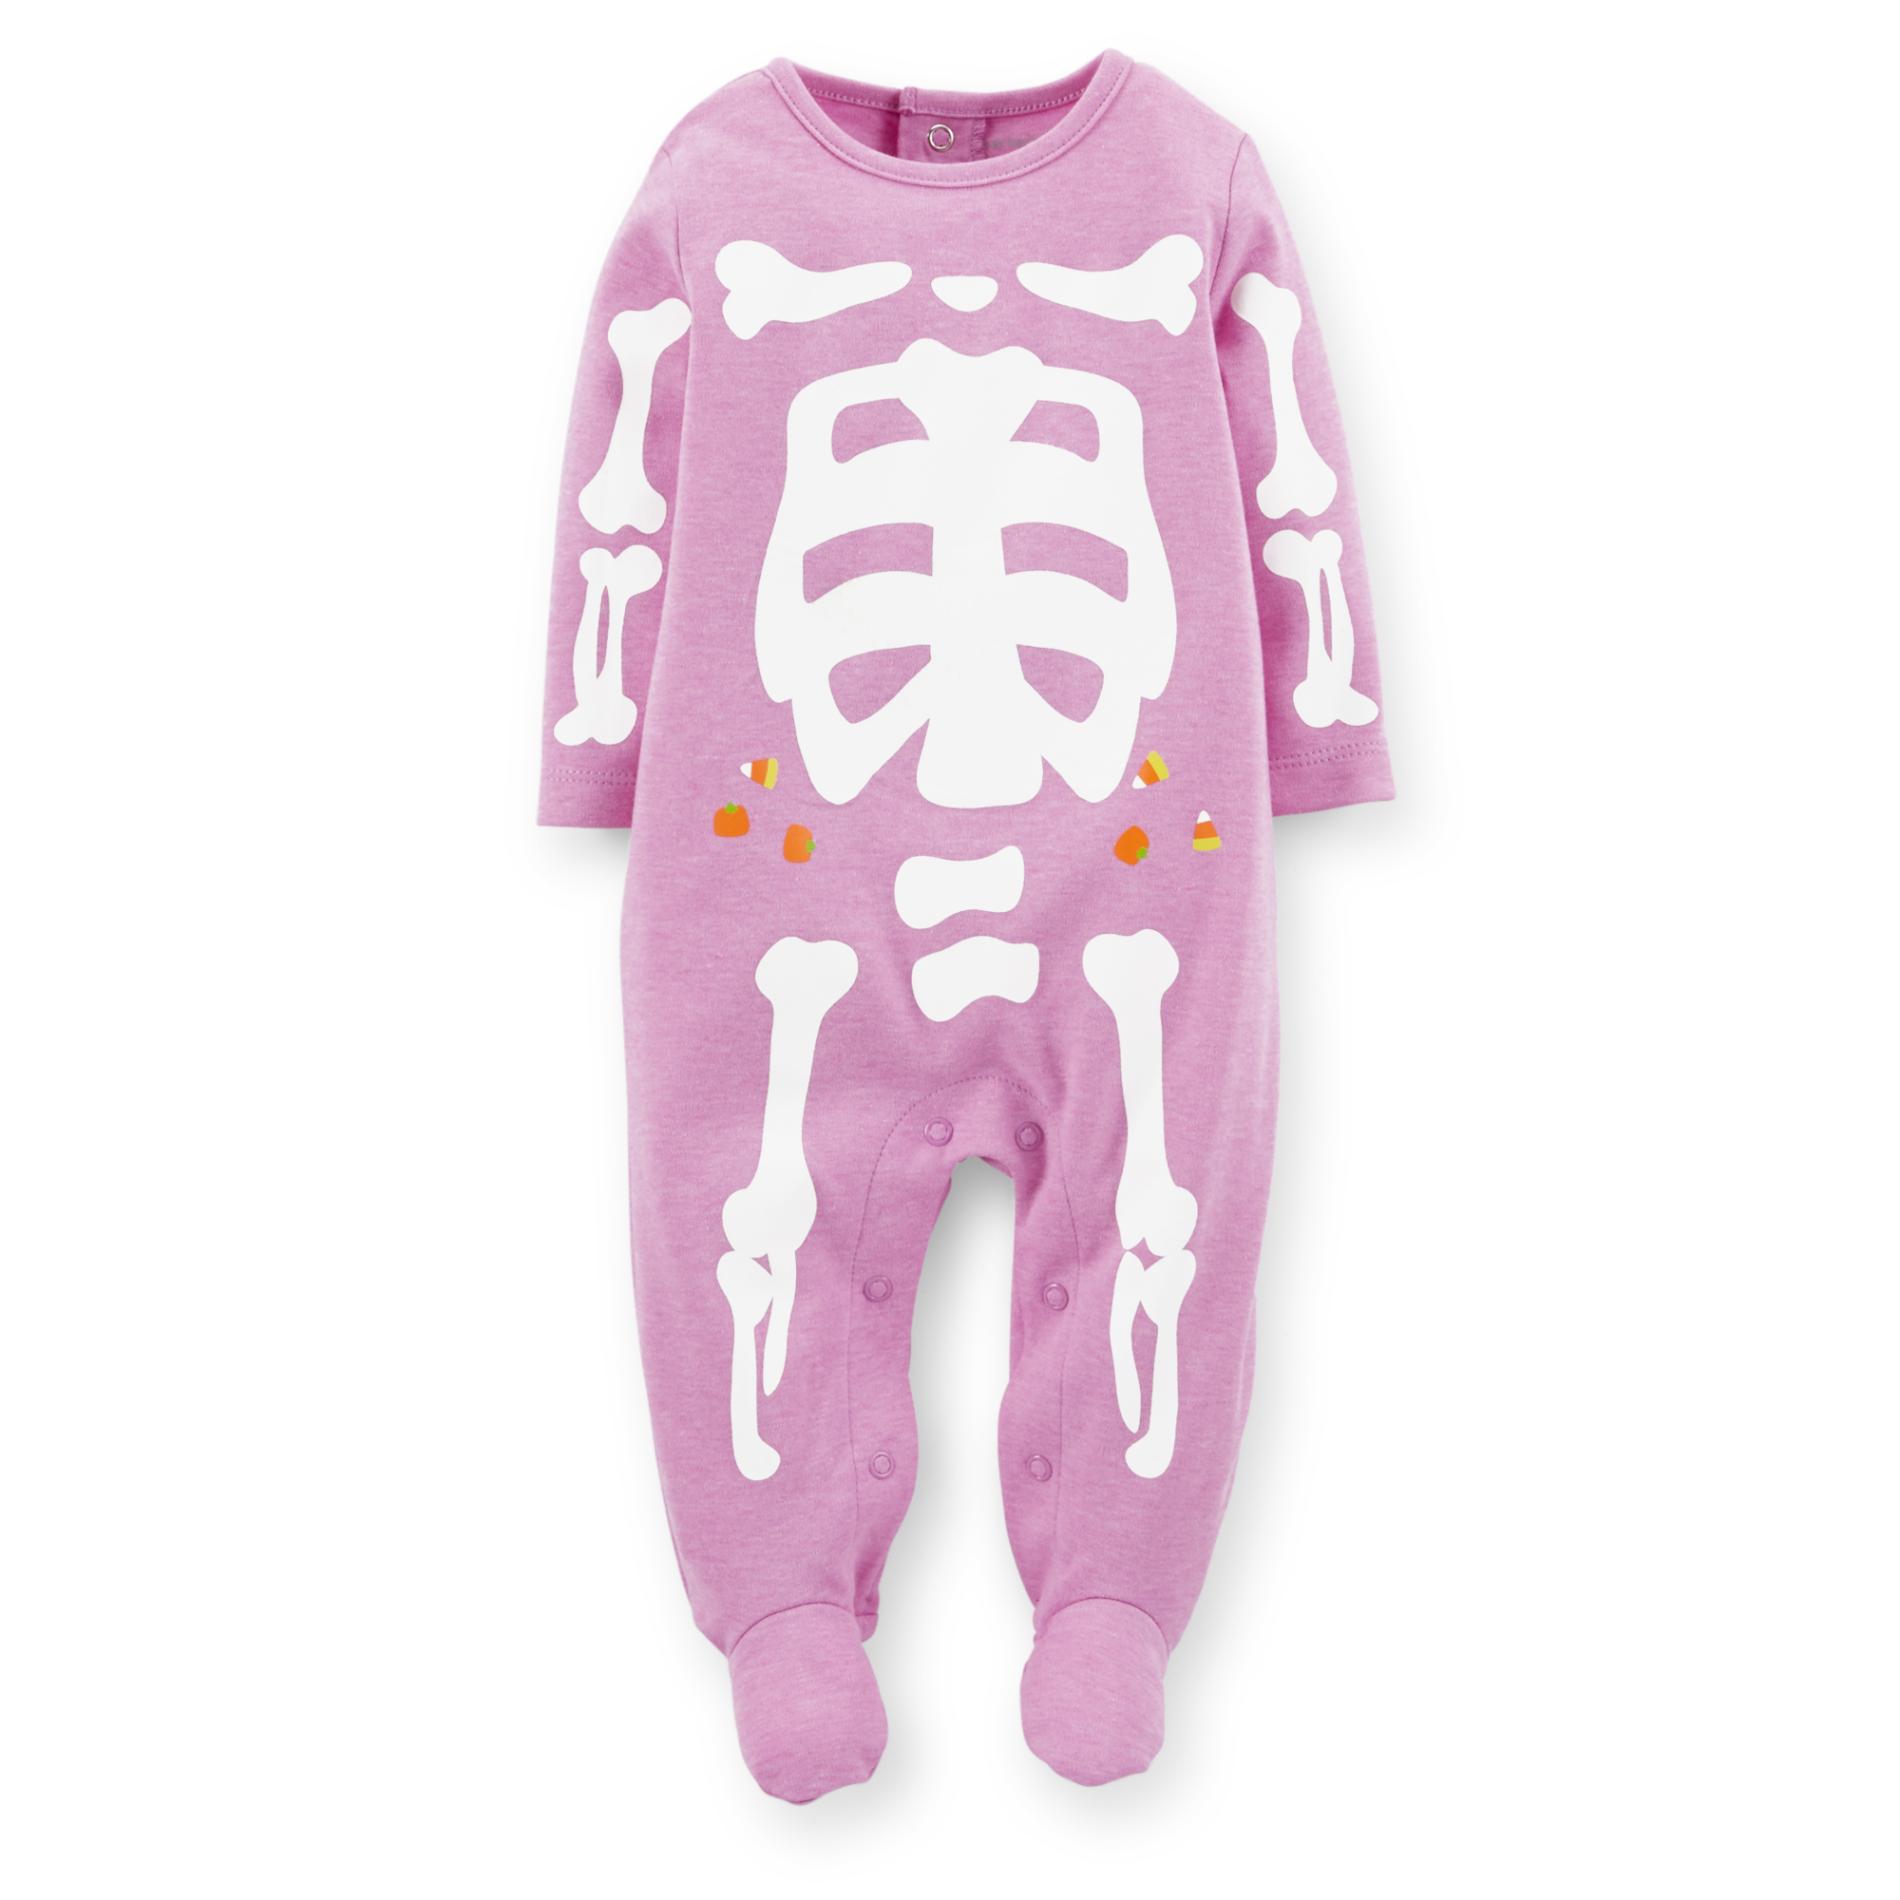 Carter's Newborn Girl's Halloween Jumpsuit - Skeleton